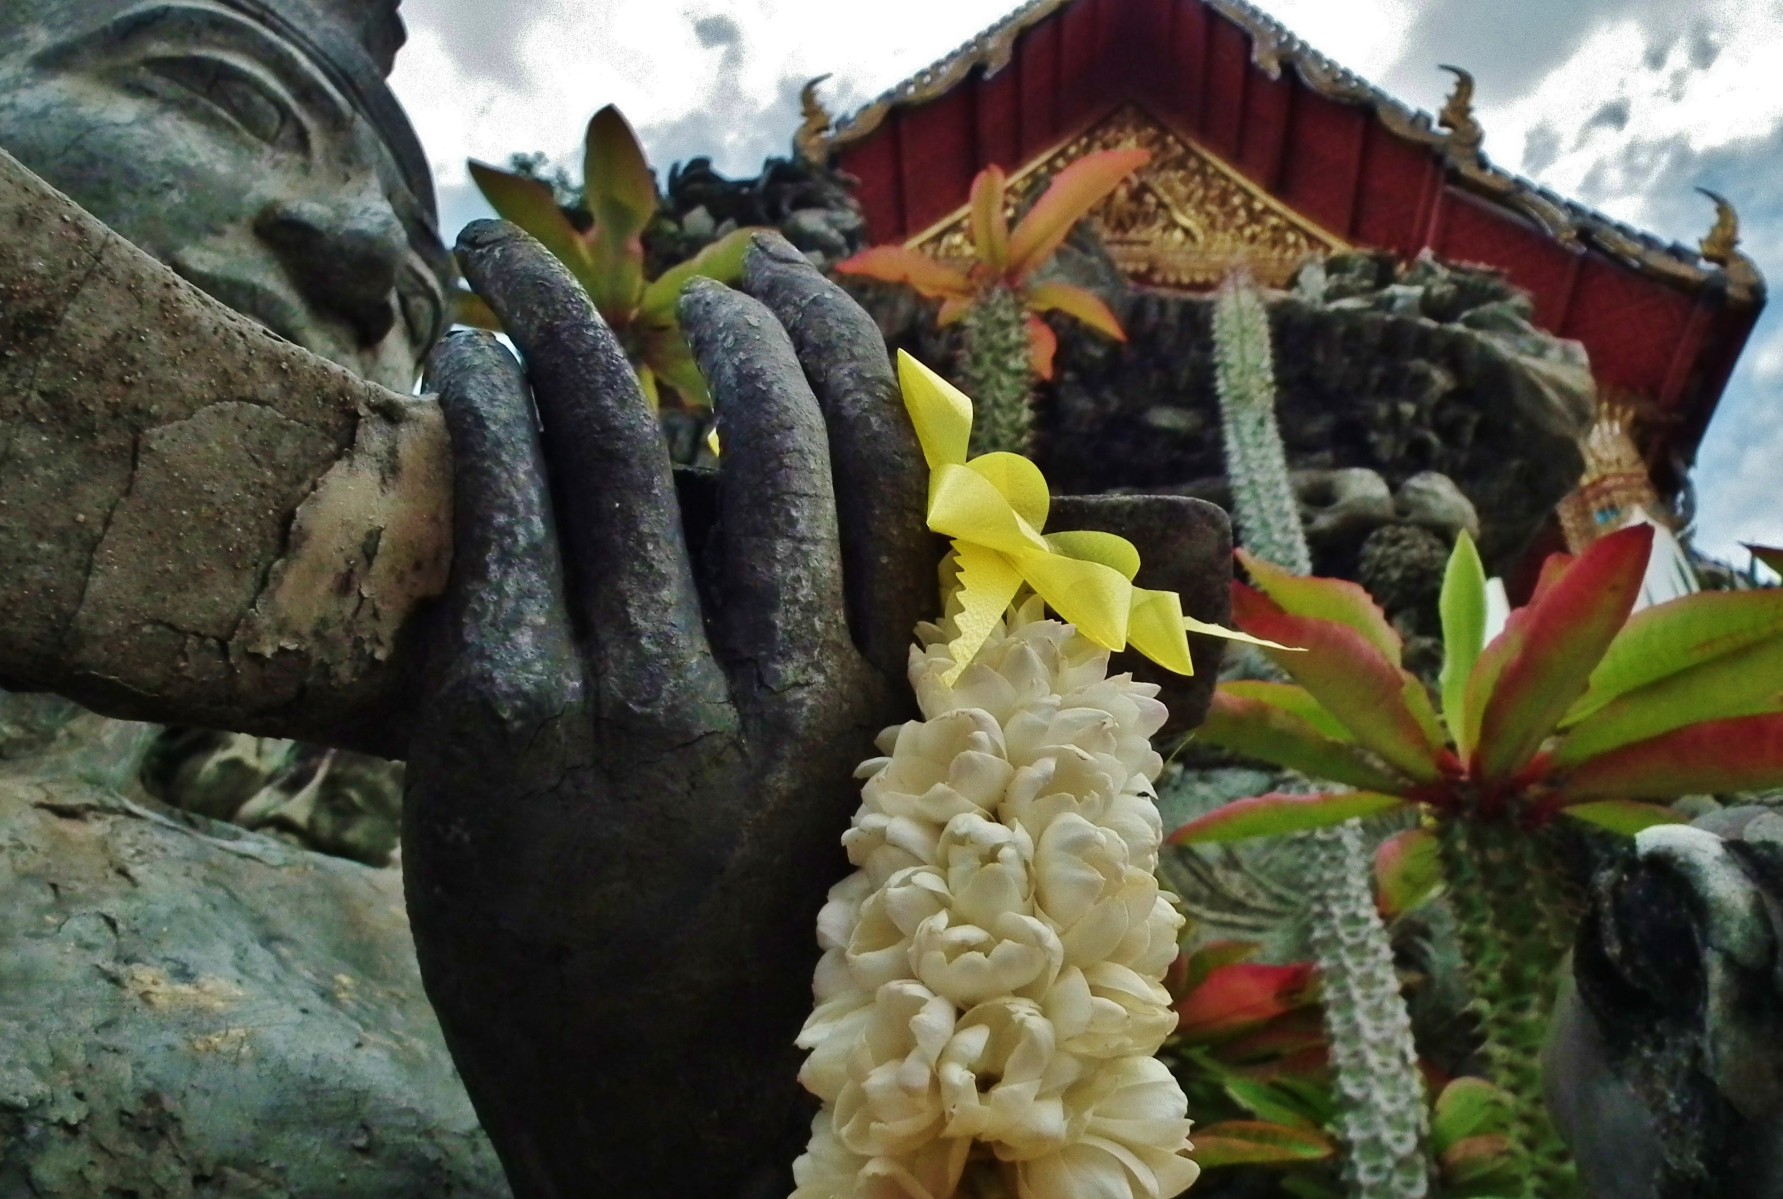 Flower garland, Flower | Flowers | Fresh | Aromatic | Temple | Thailand | Statue | Shrine | Garland | Travel | Culture | People | Religious | Buddhism